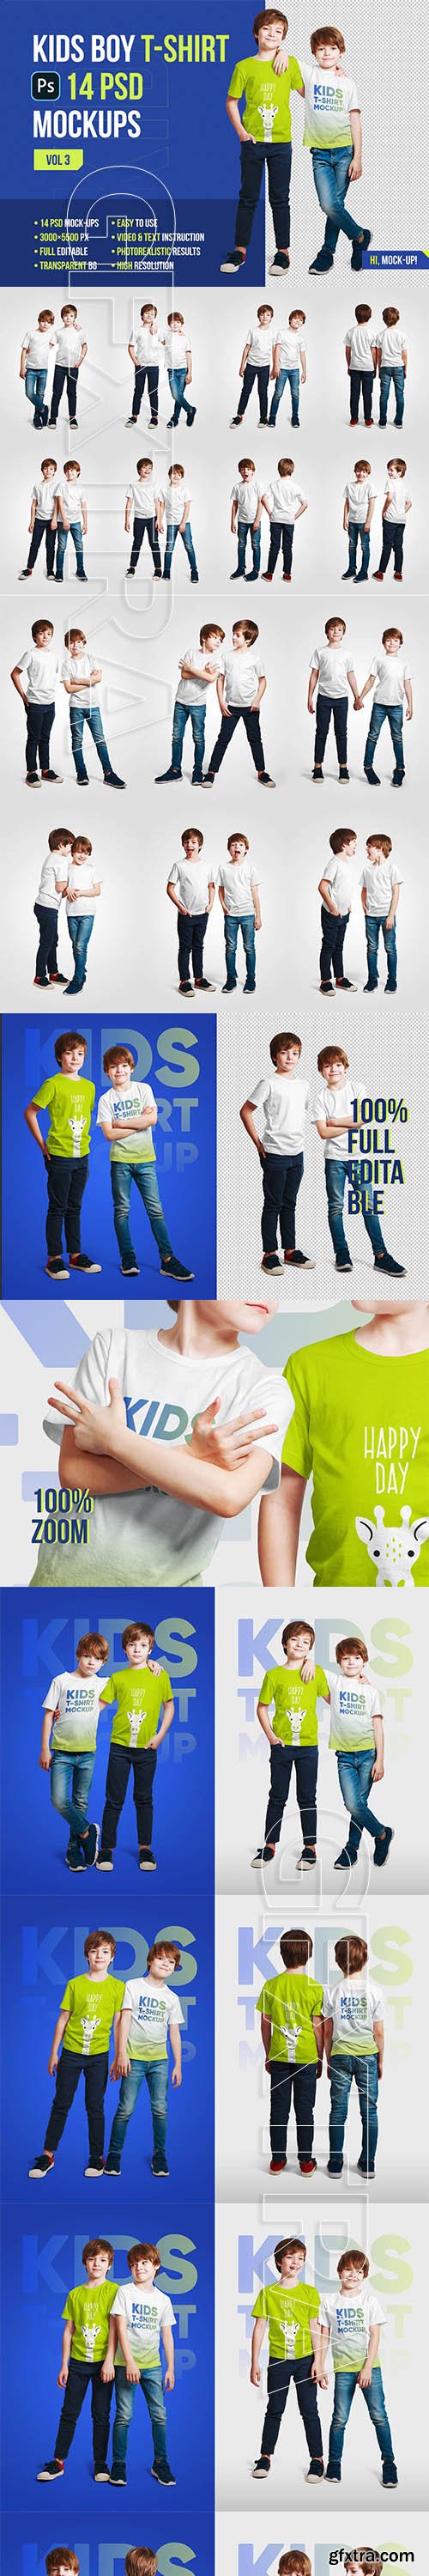 CreativeMarket - Kids Boy T-Shirt Mockups Vol3 5336752